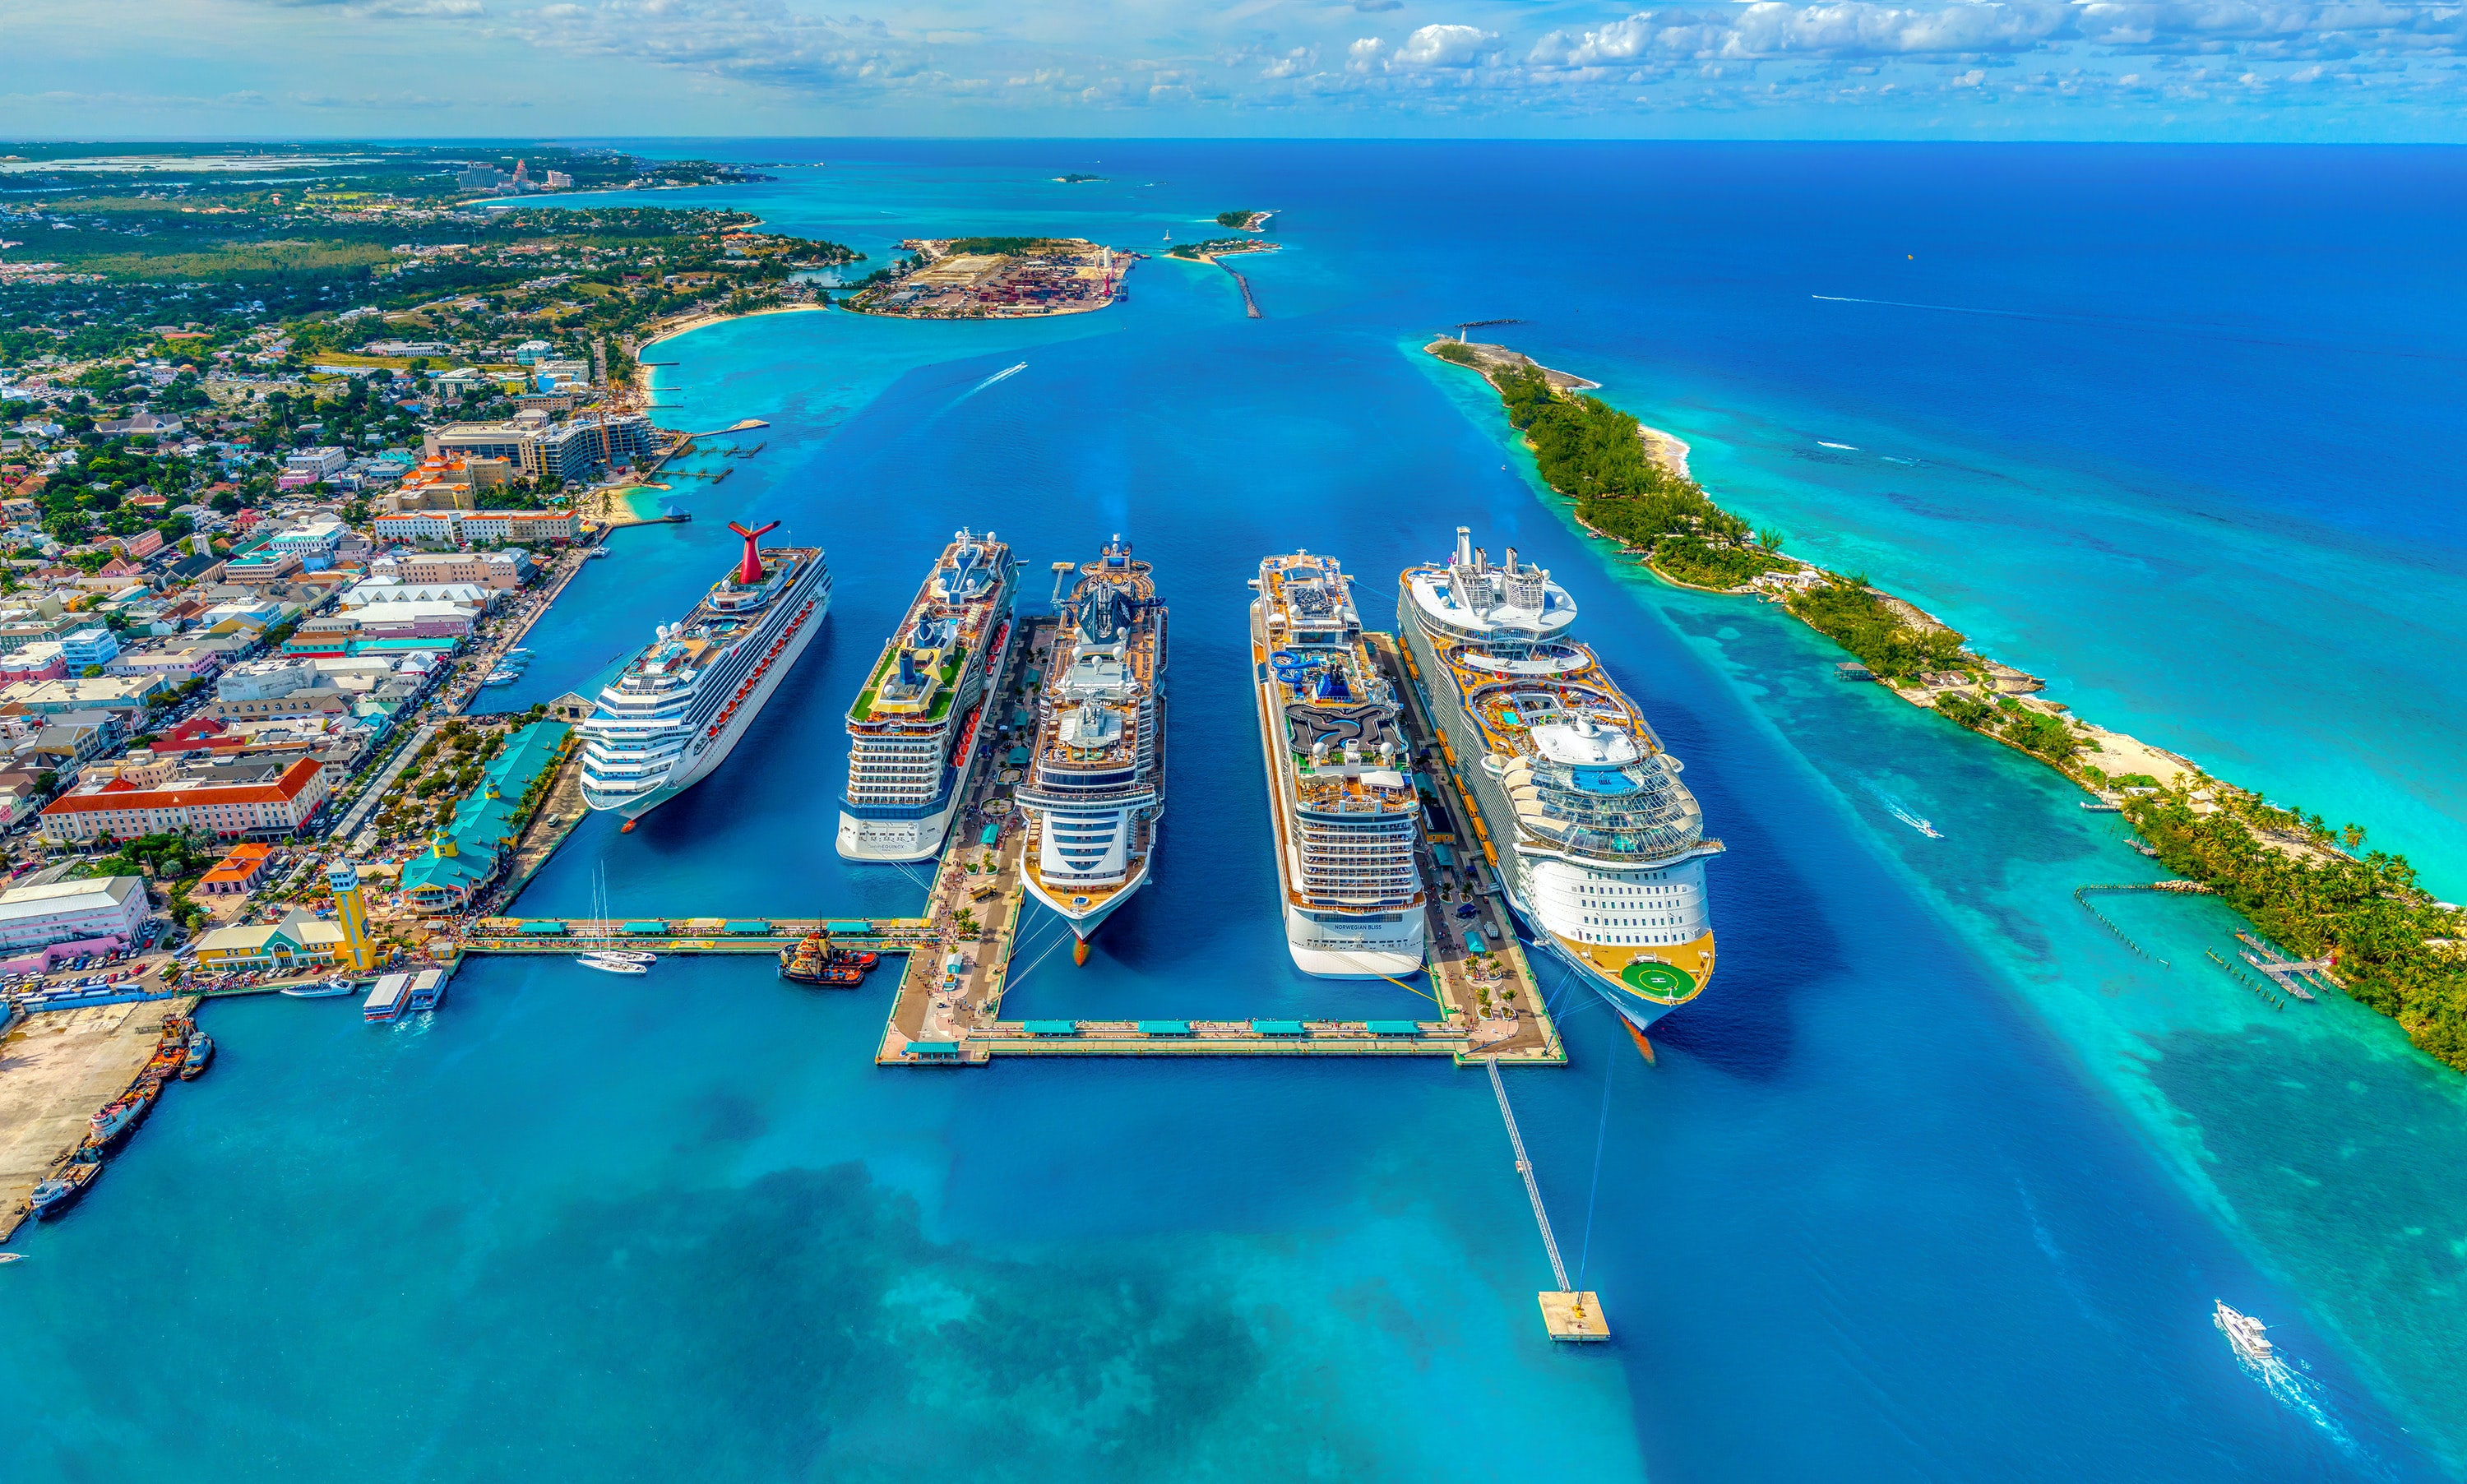 Cruise ships in the Bahamas